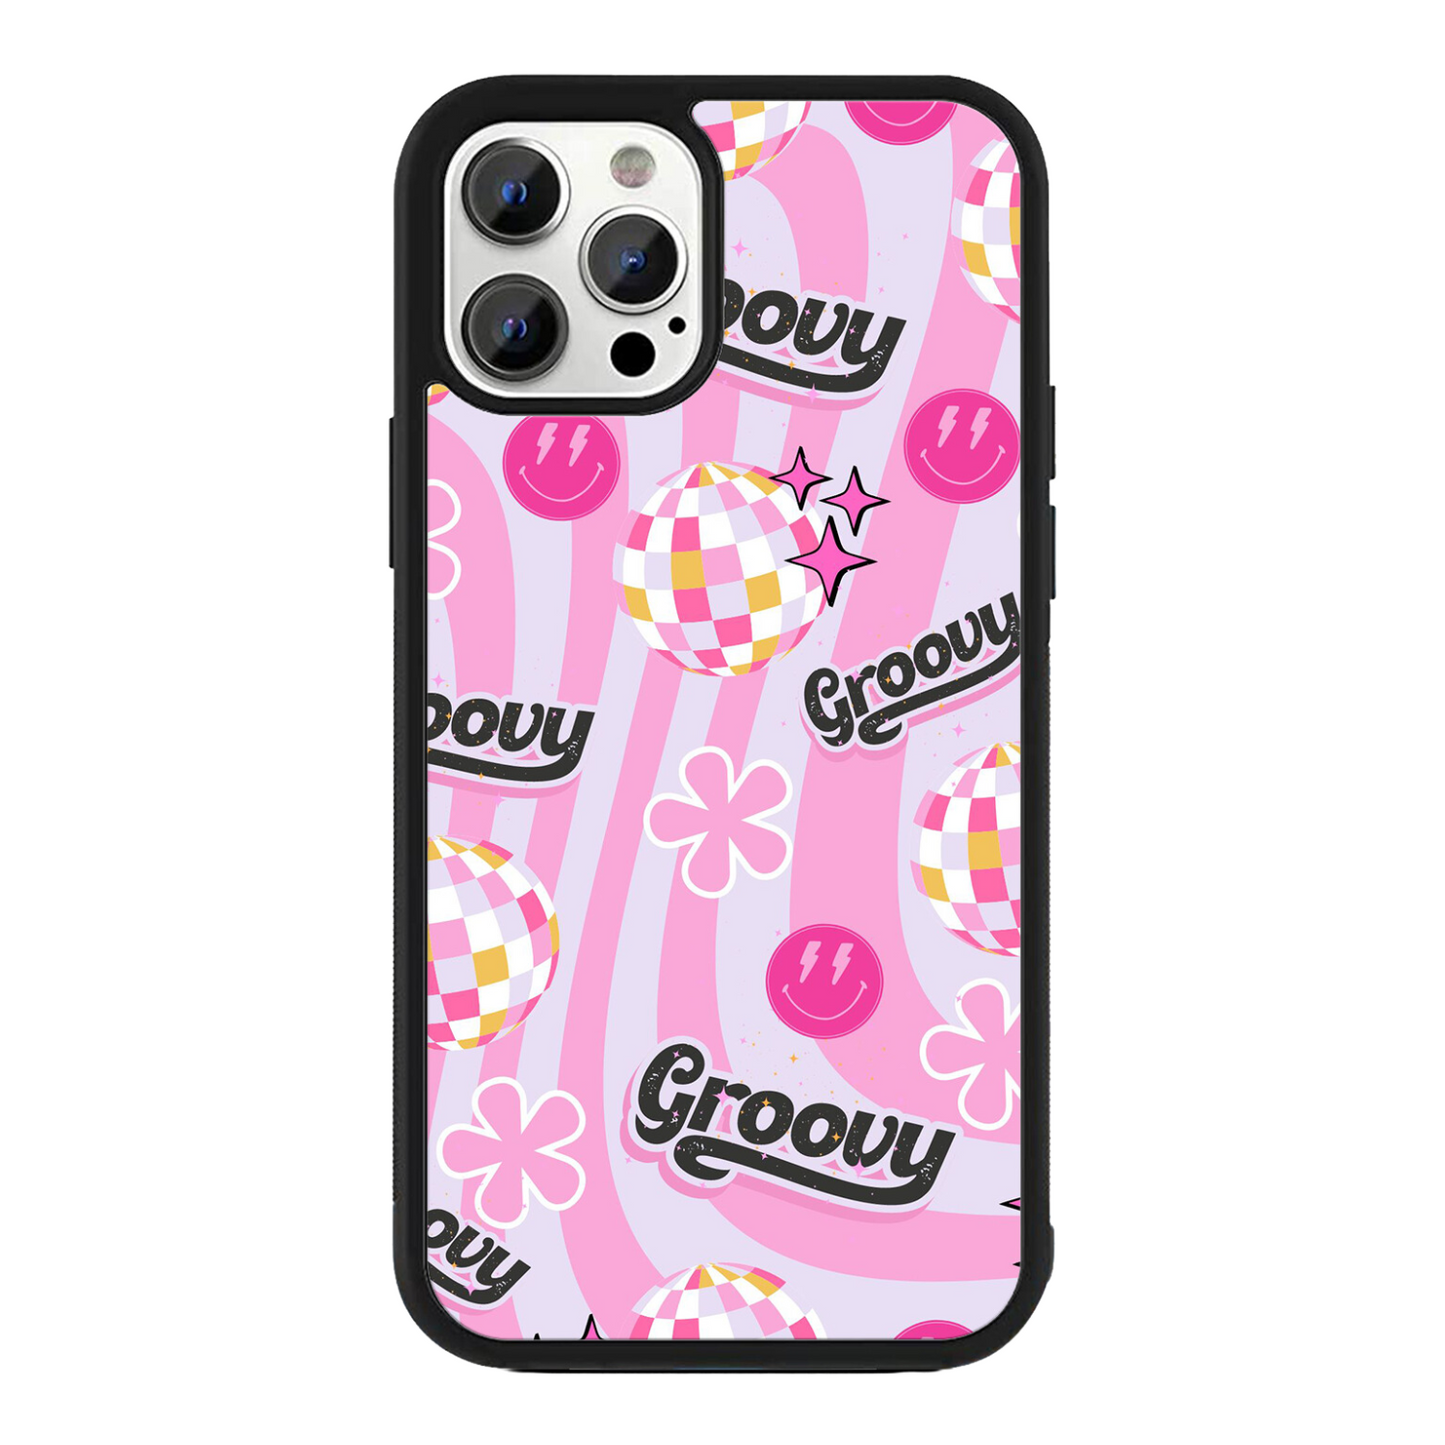 Wavy Groove iPhone Case